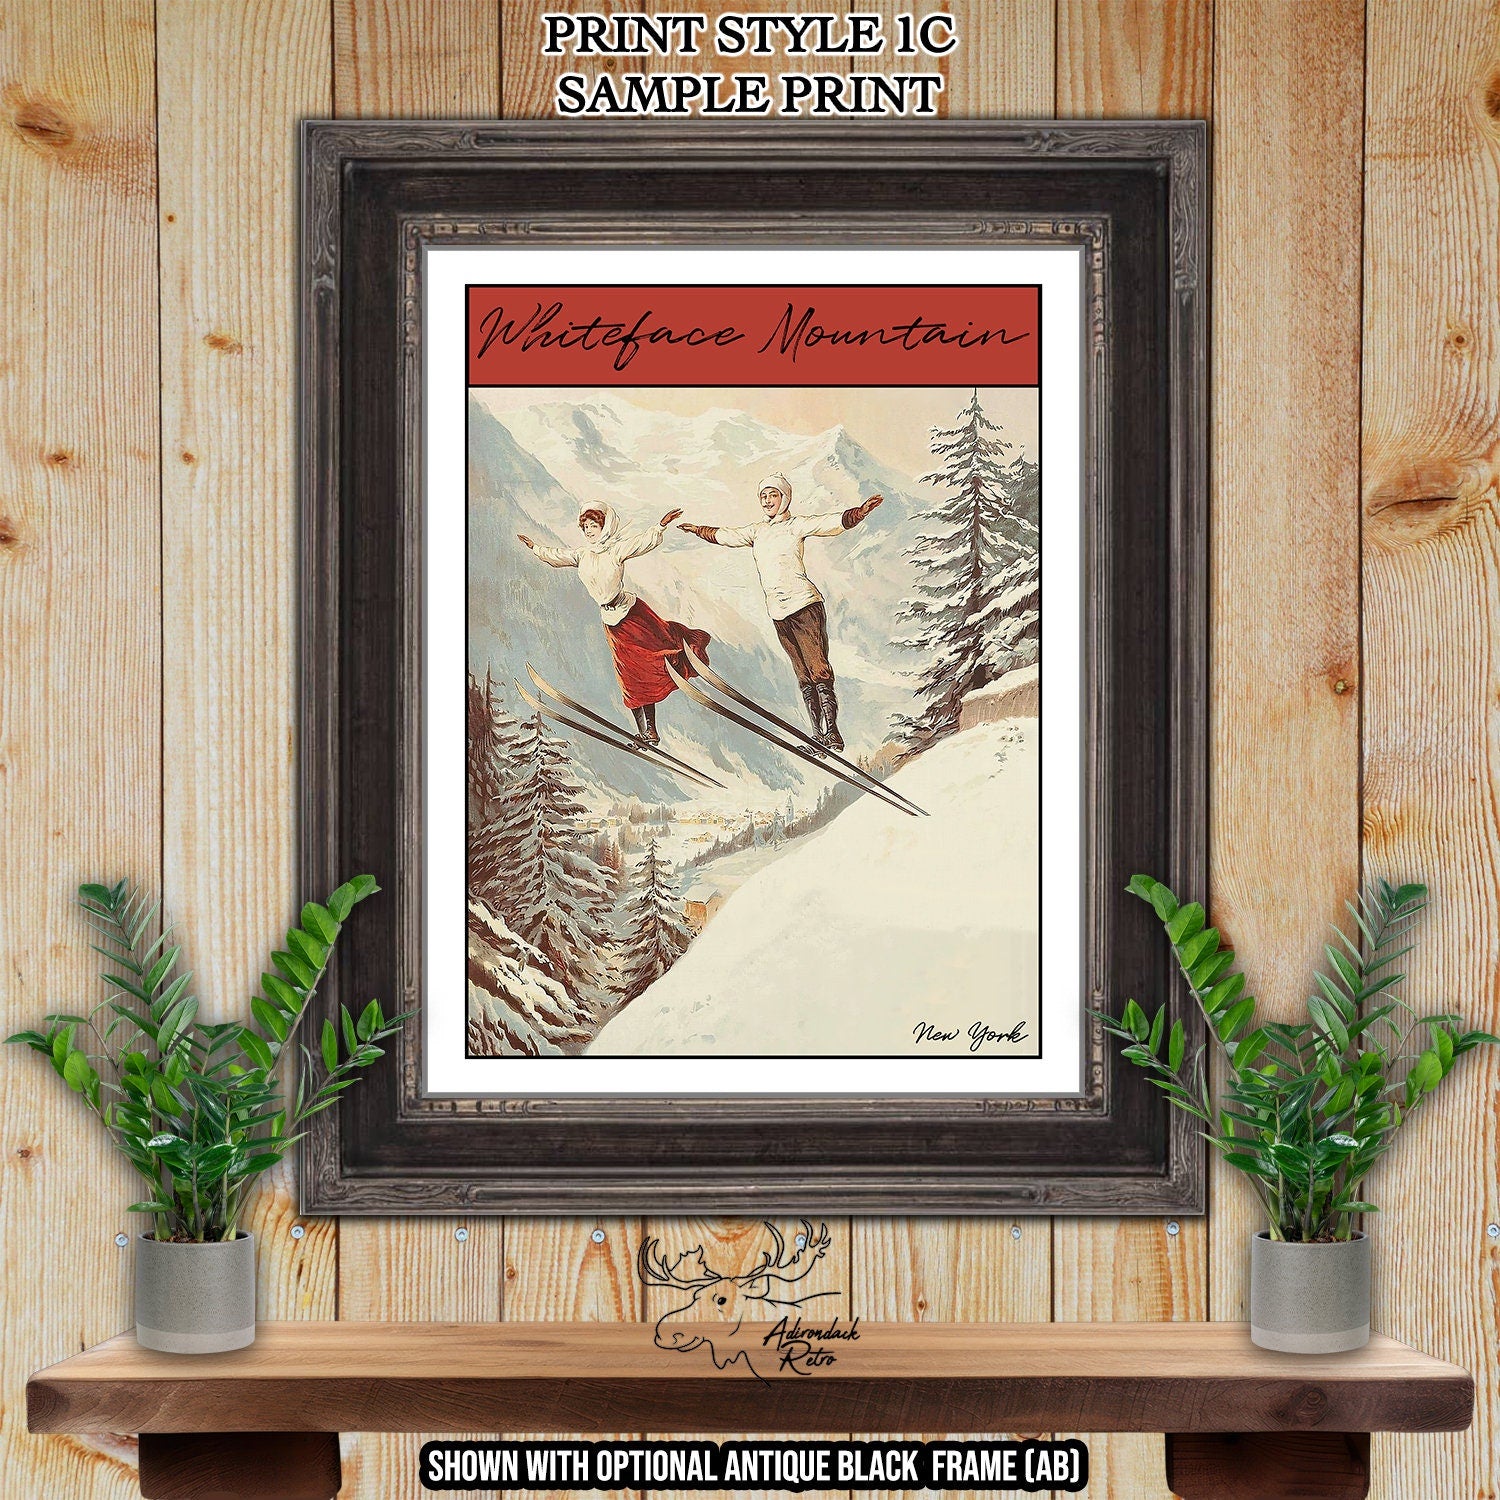 China Peak California Retro Ski Resort Print